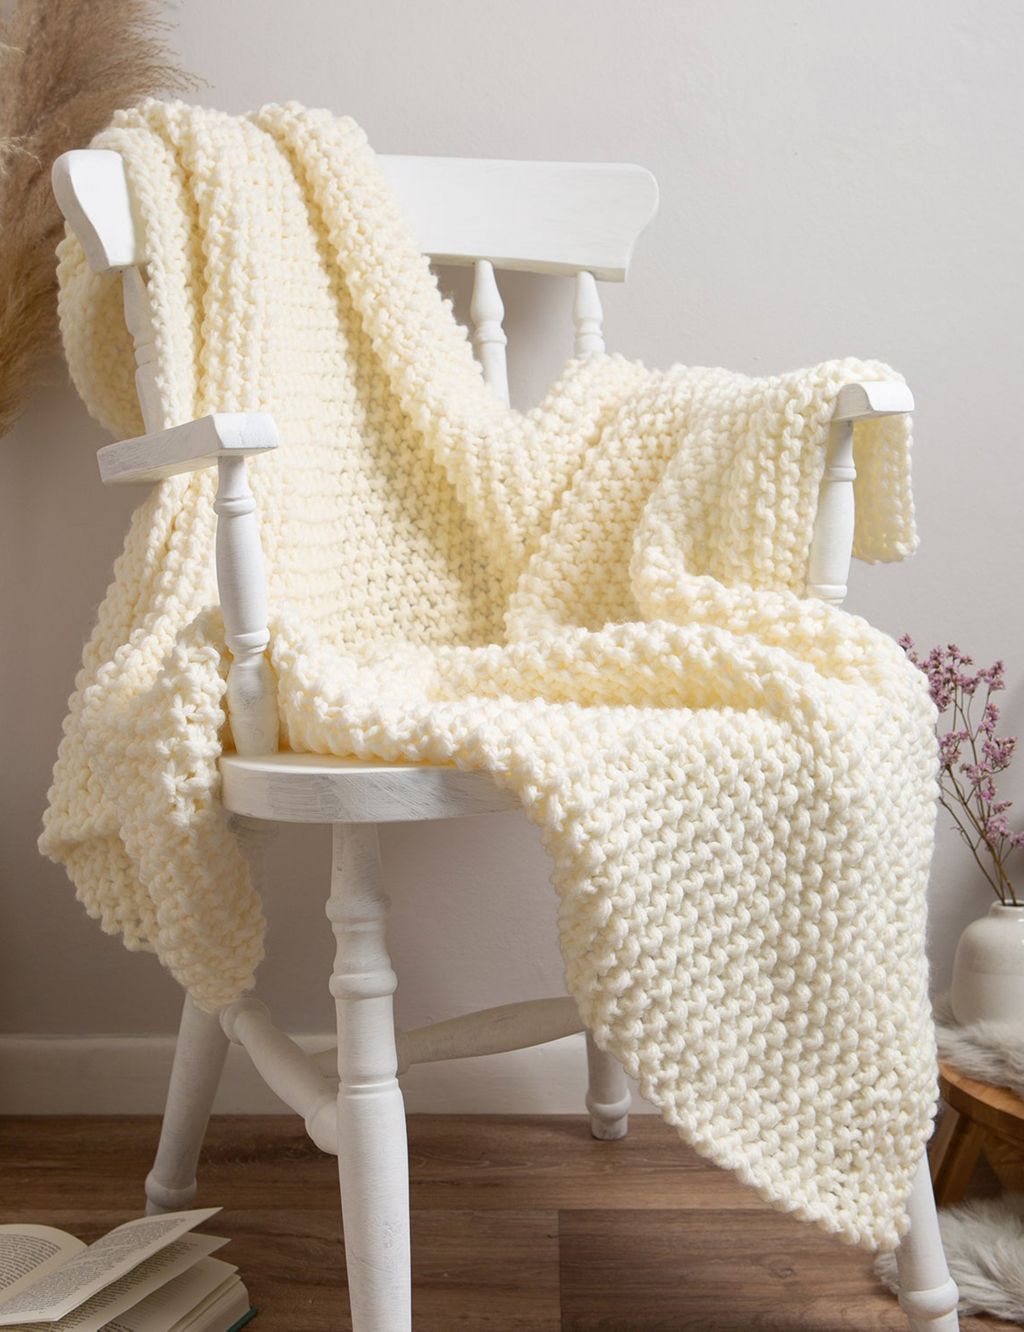 Moss Stitch Blanket Knitting Kit